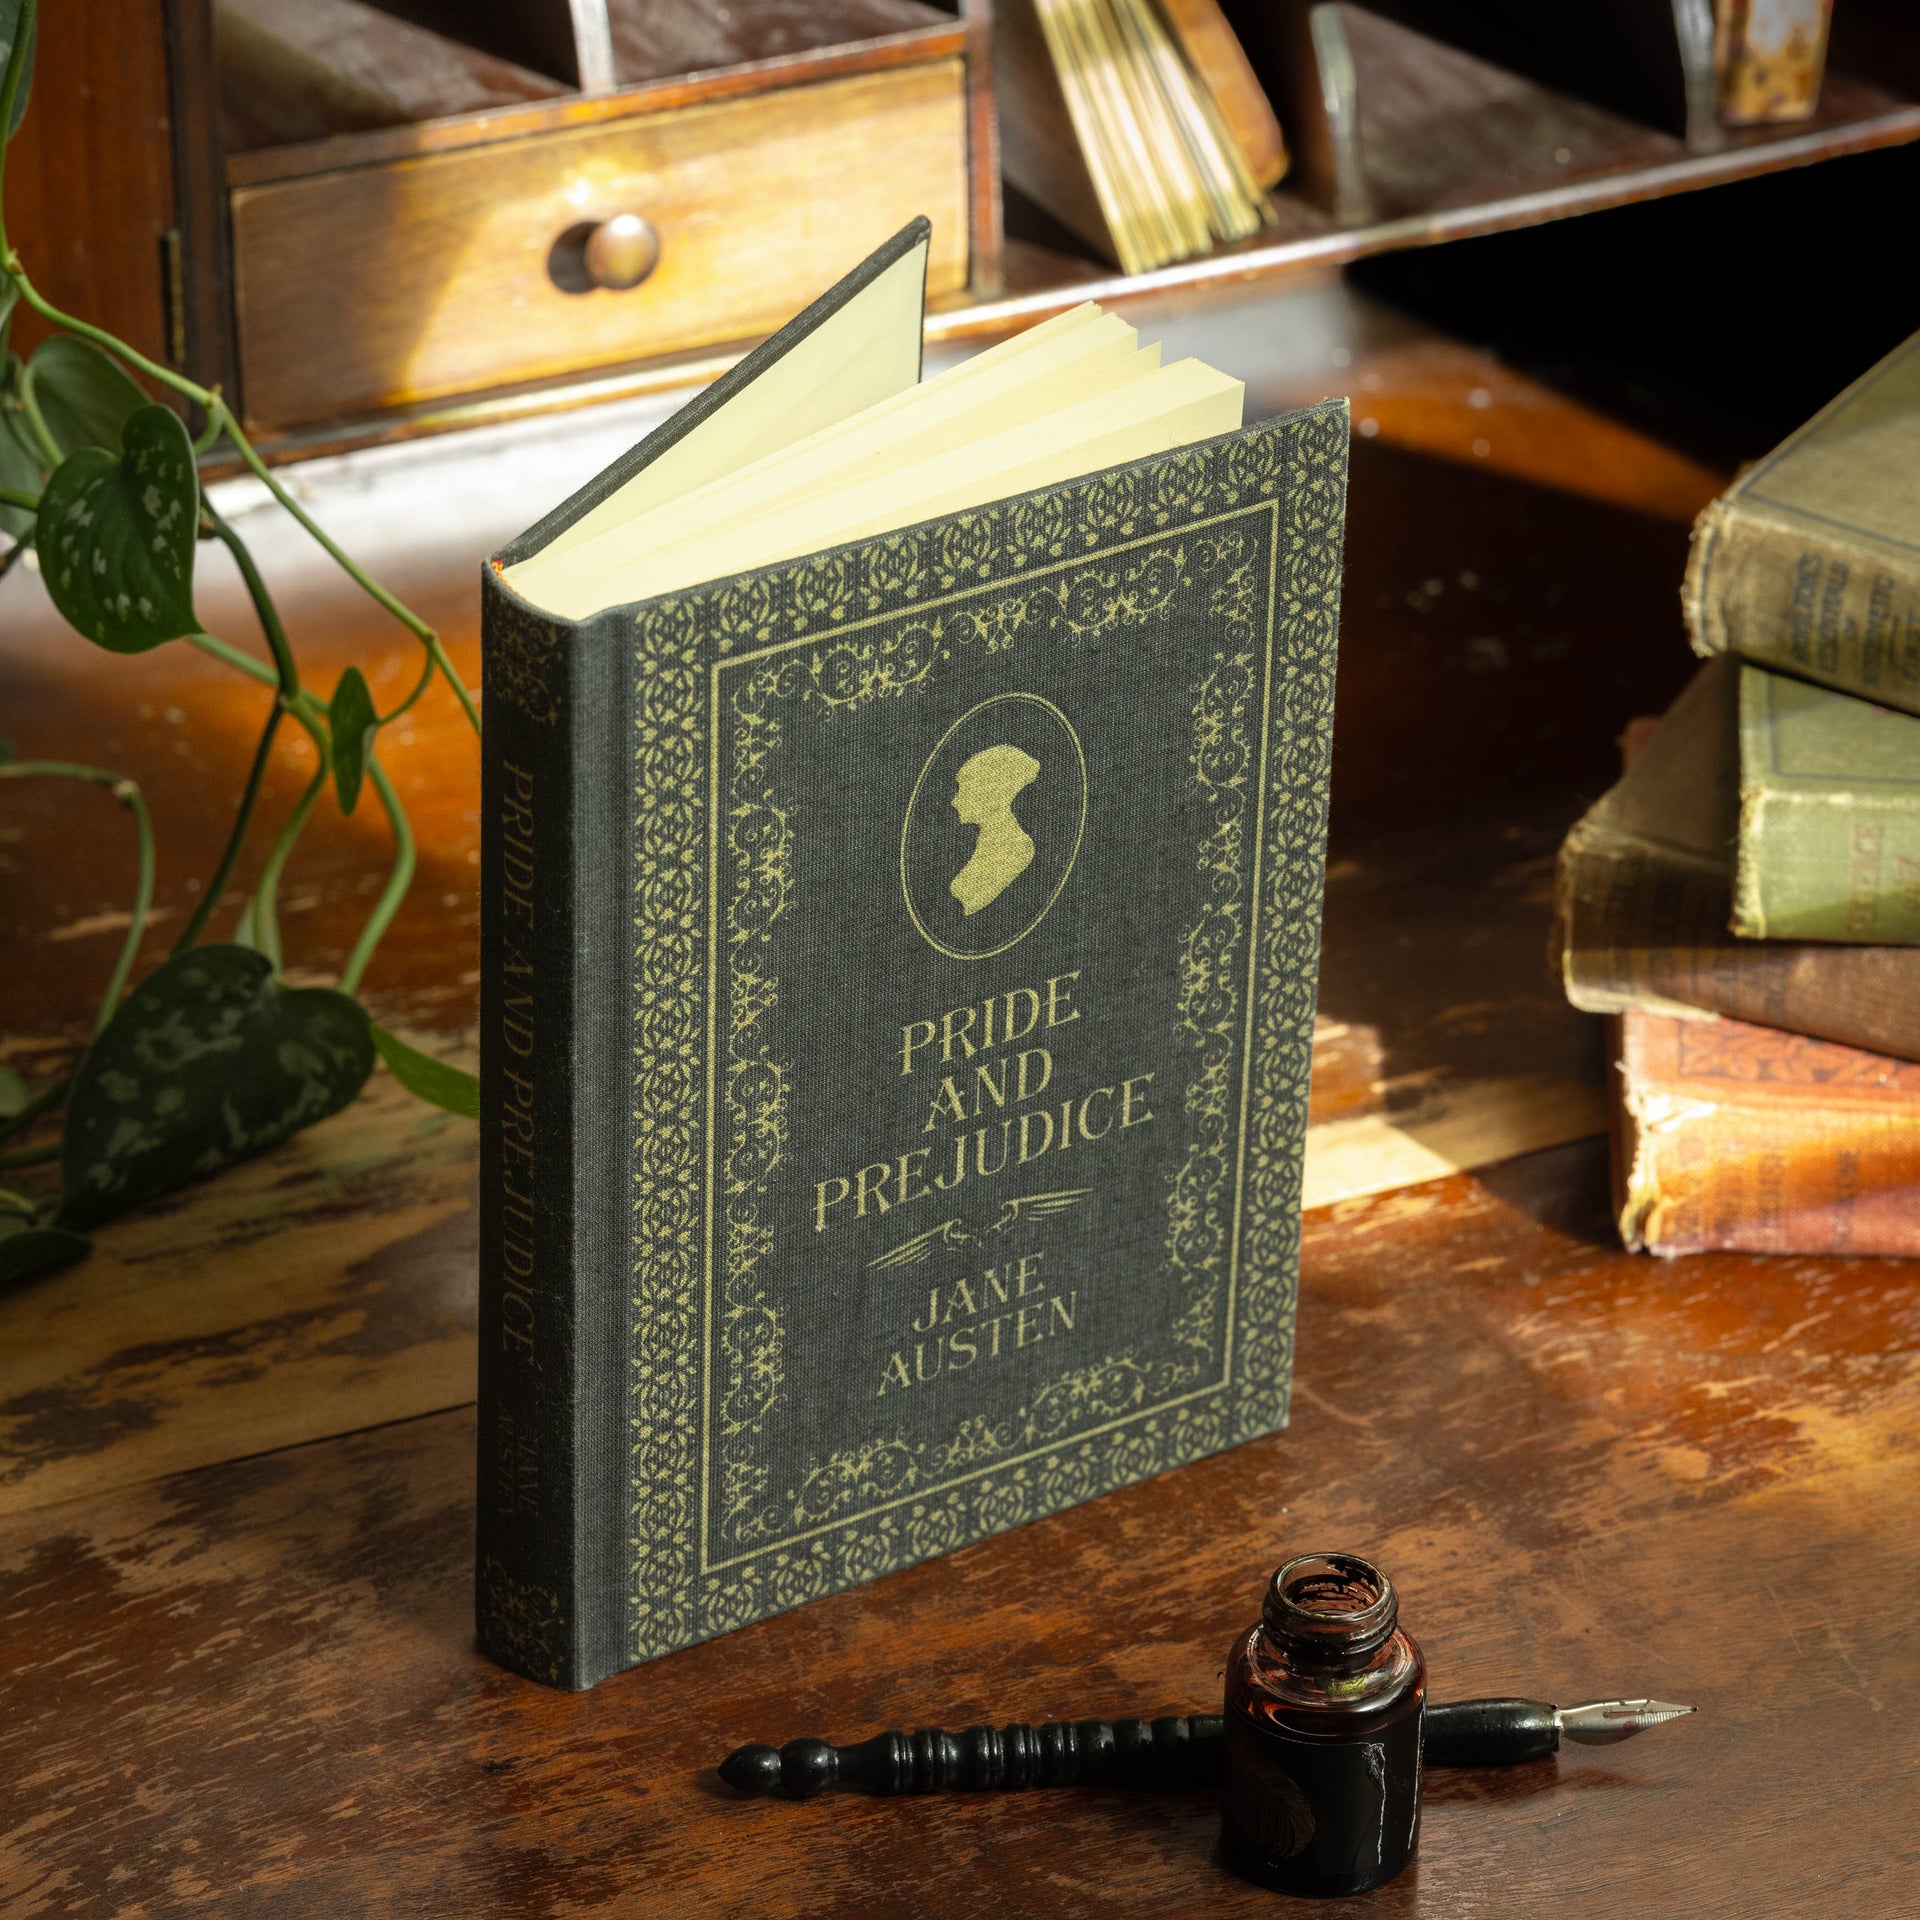 Jane Austen: Romance, Writing, & Relationships - Bookstr